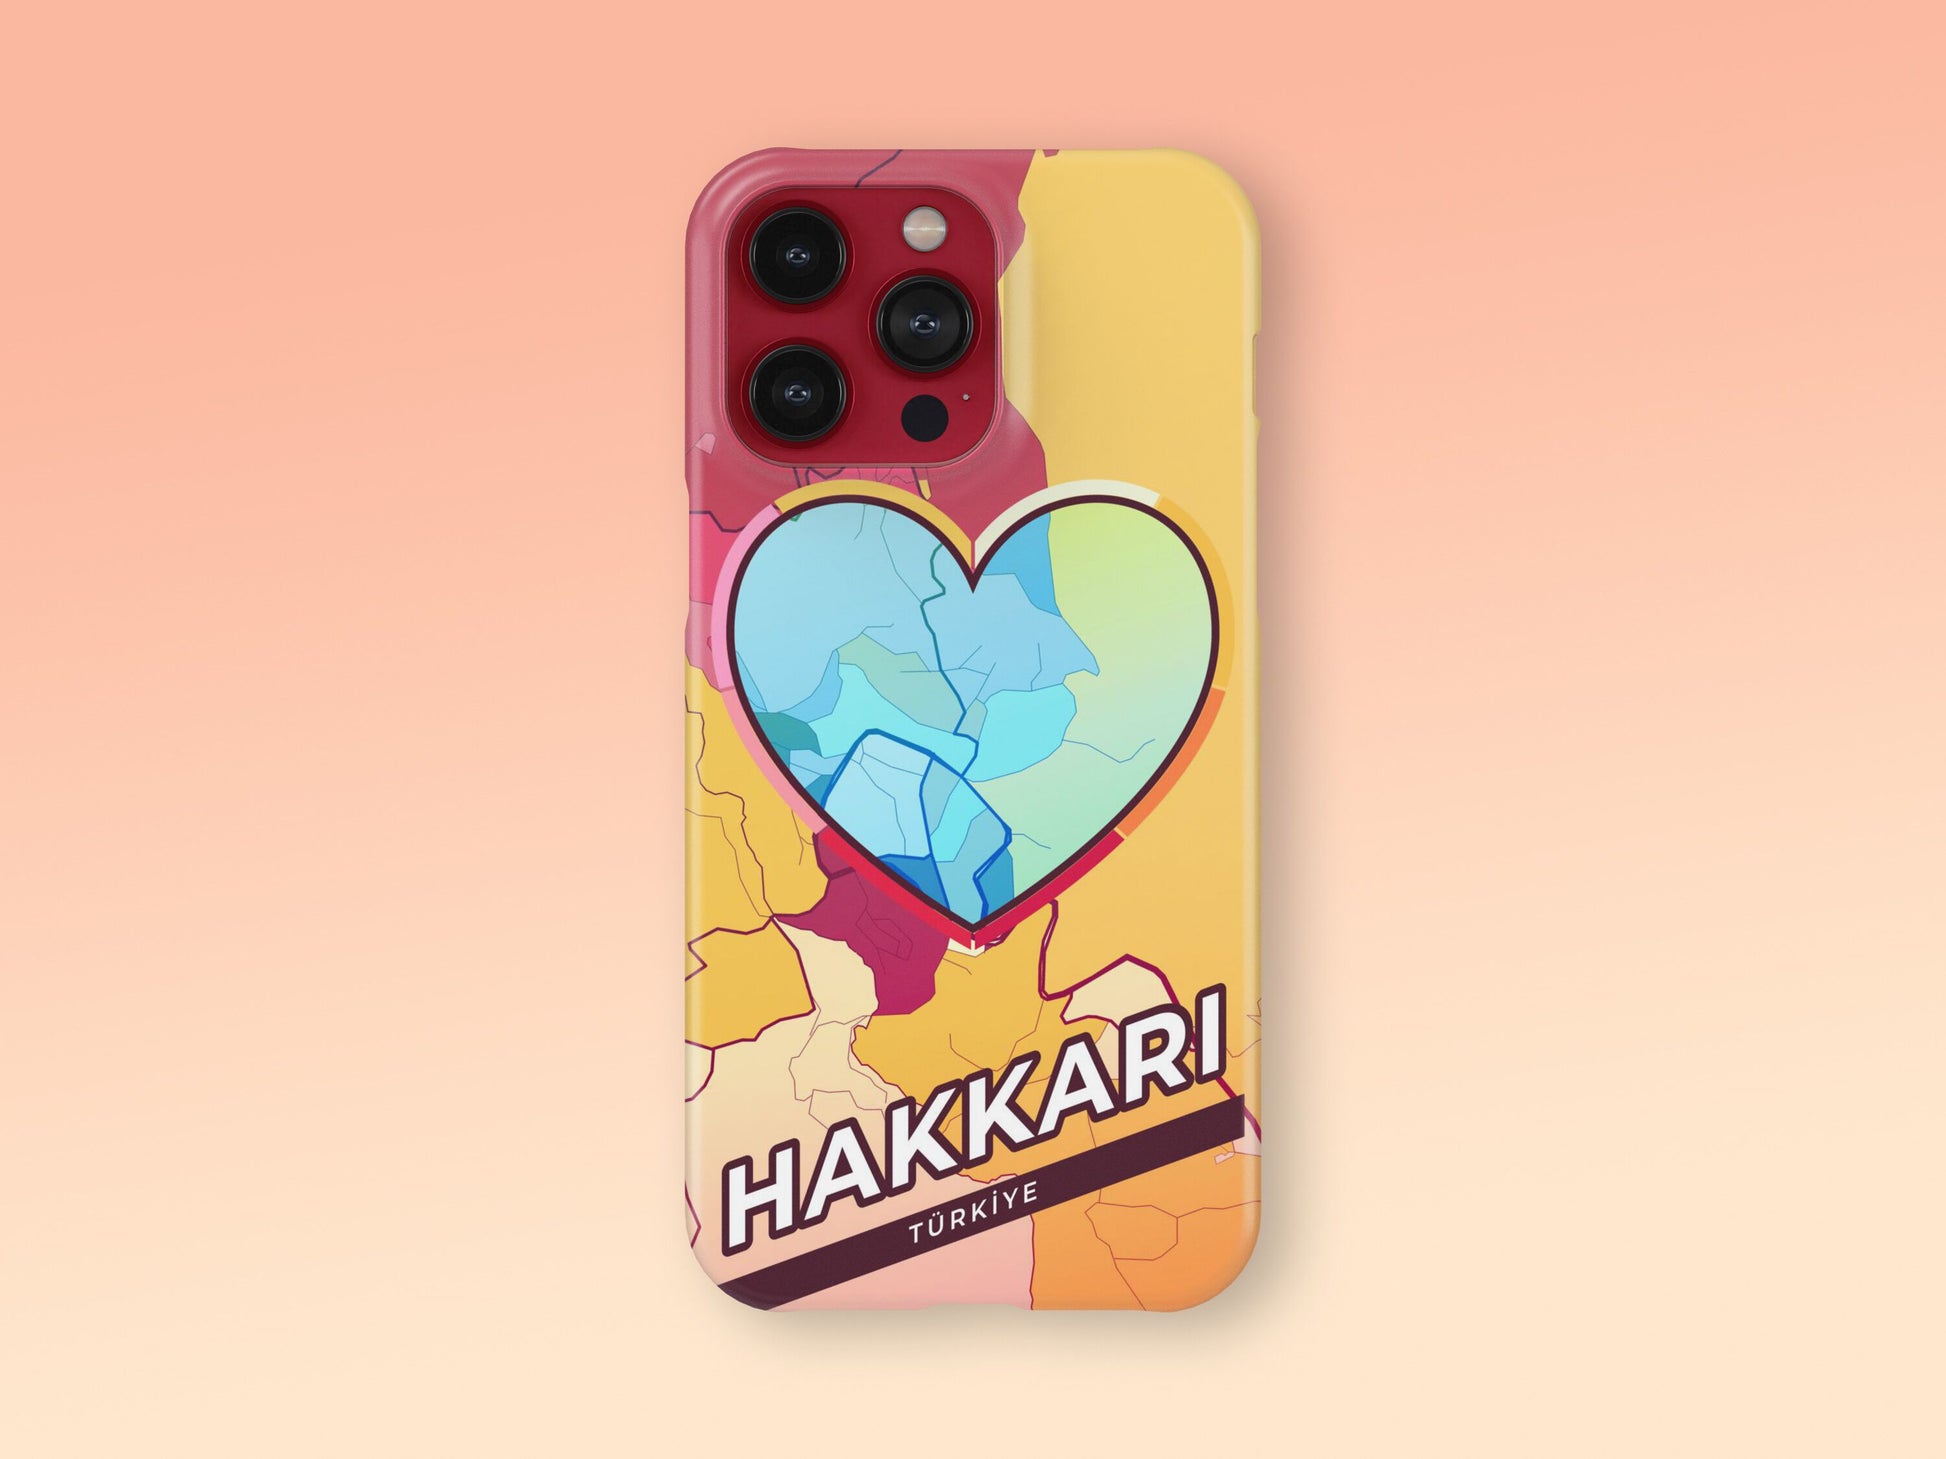 Hakkâri Turkey slim phone case with colorful icon. Birthday, wedding or housewarming gift. Couple match cases. 2